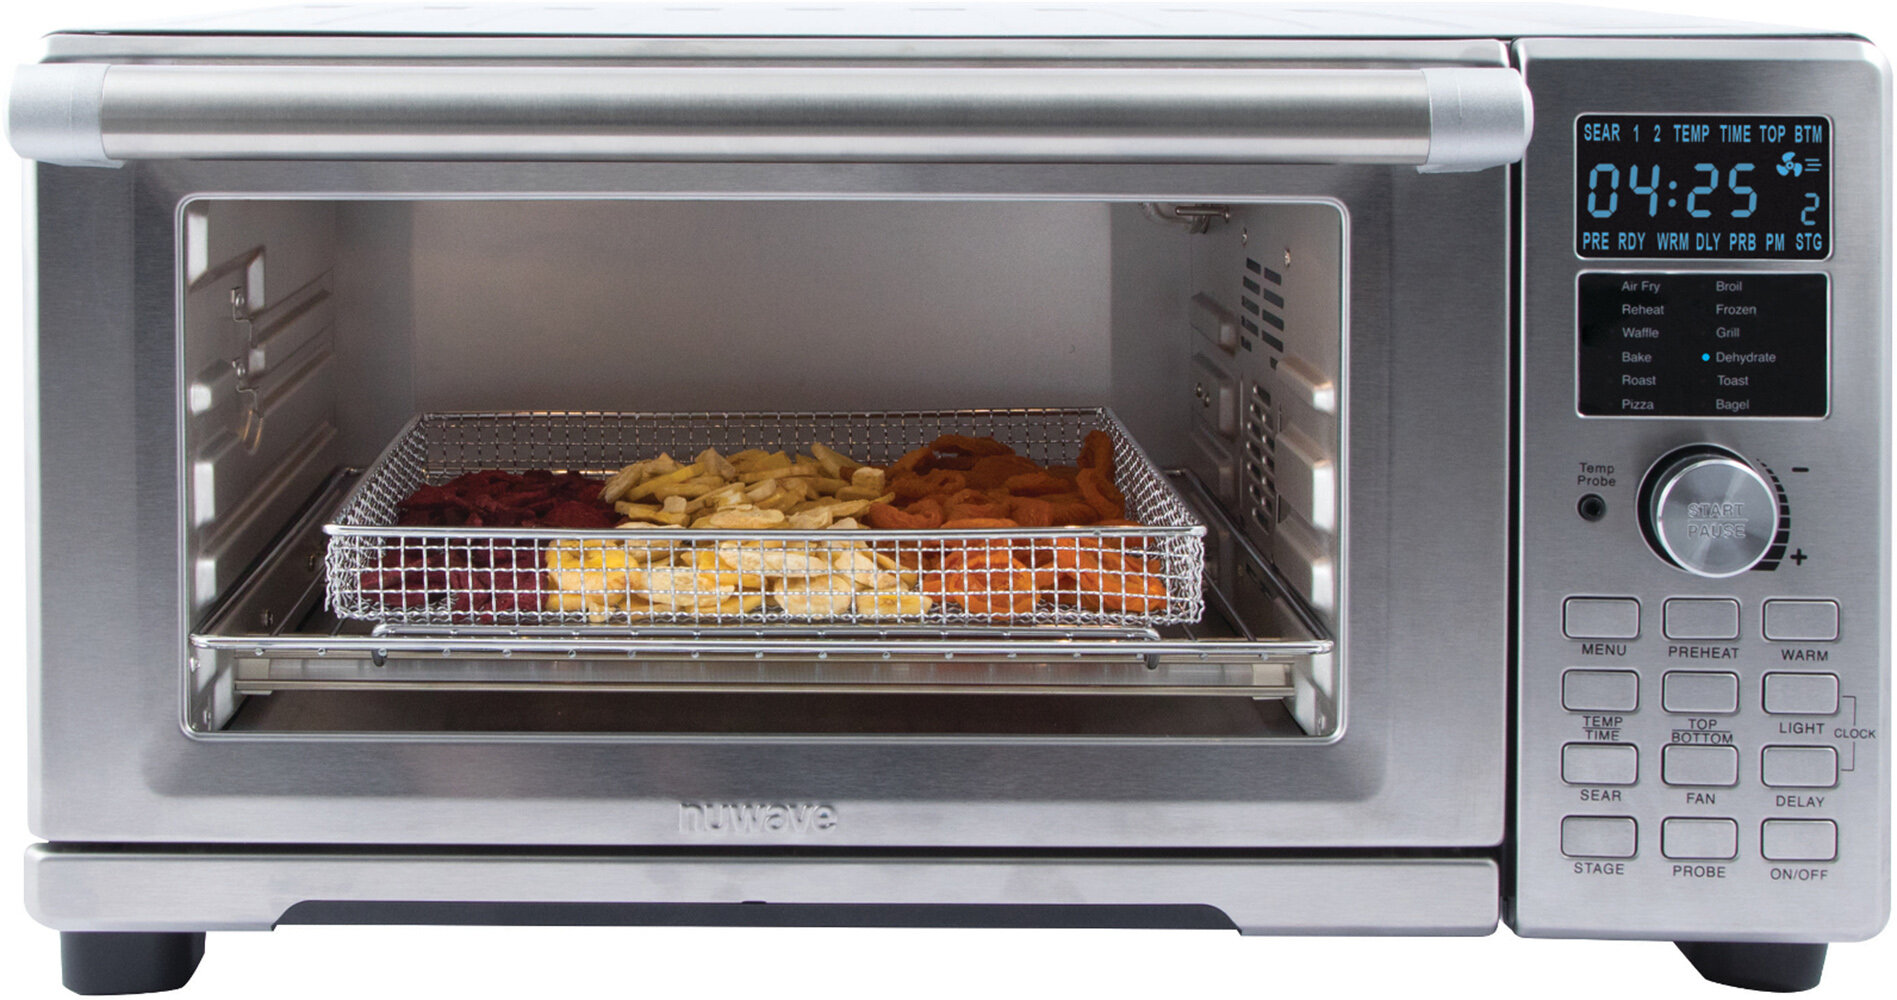 Nuwave Bravo Toaster Oven Reviews Wayfair